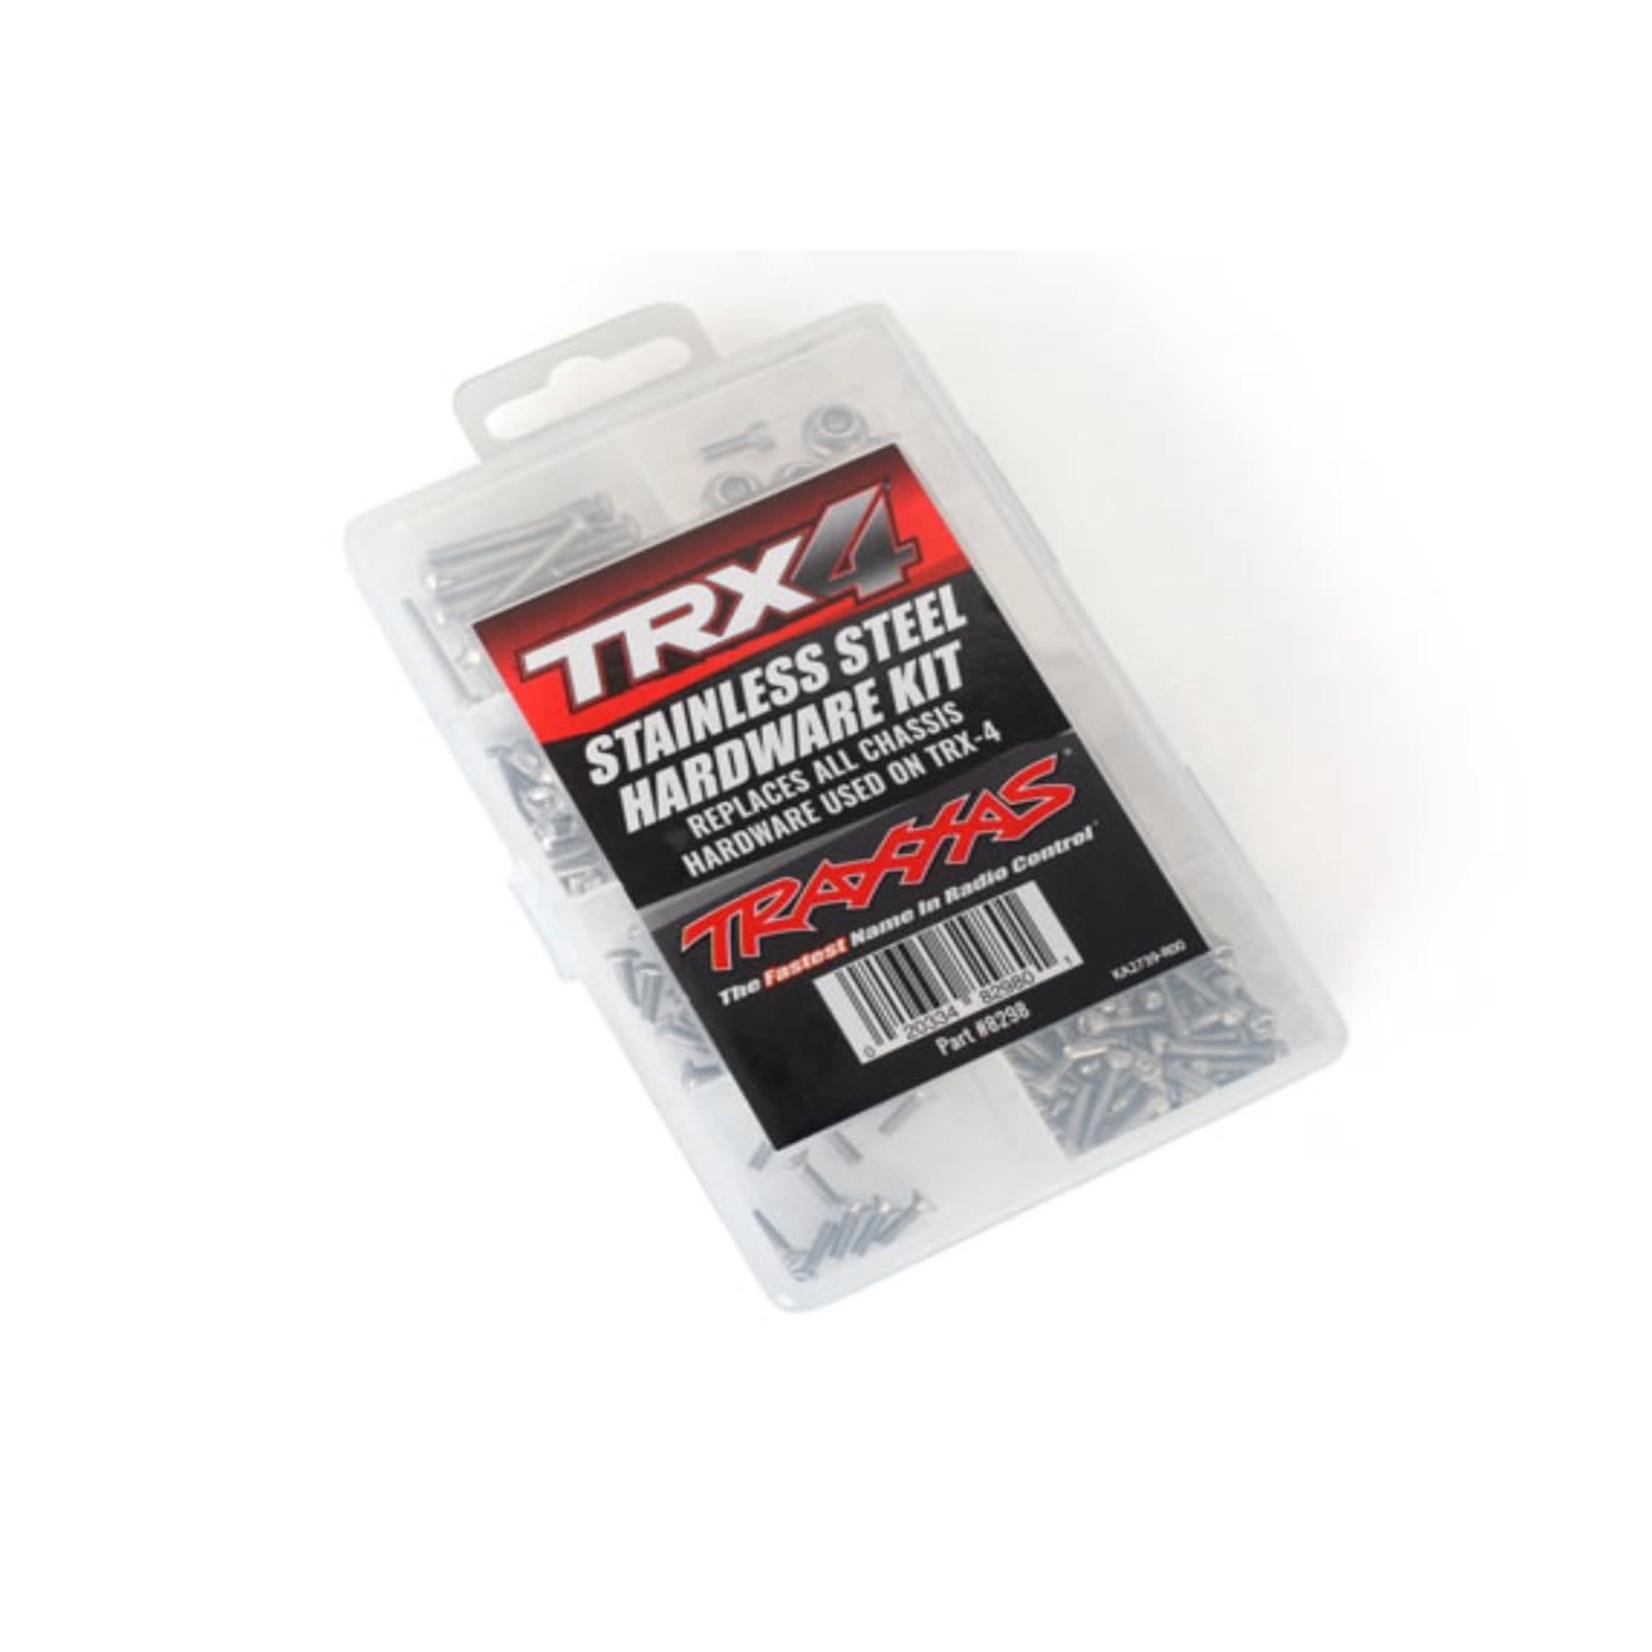 Traxxas Hardware kit, stainless steel, TRX-4